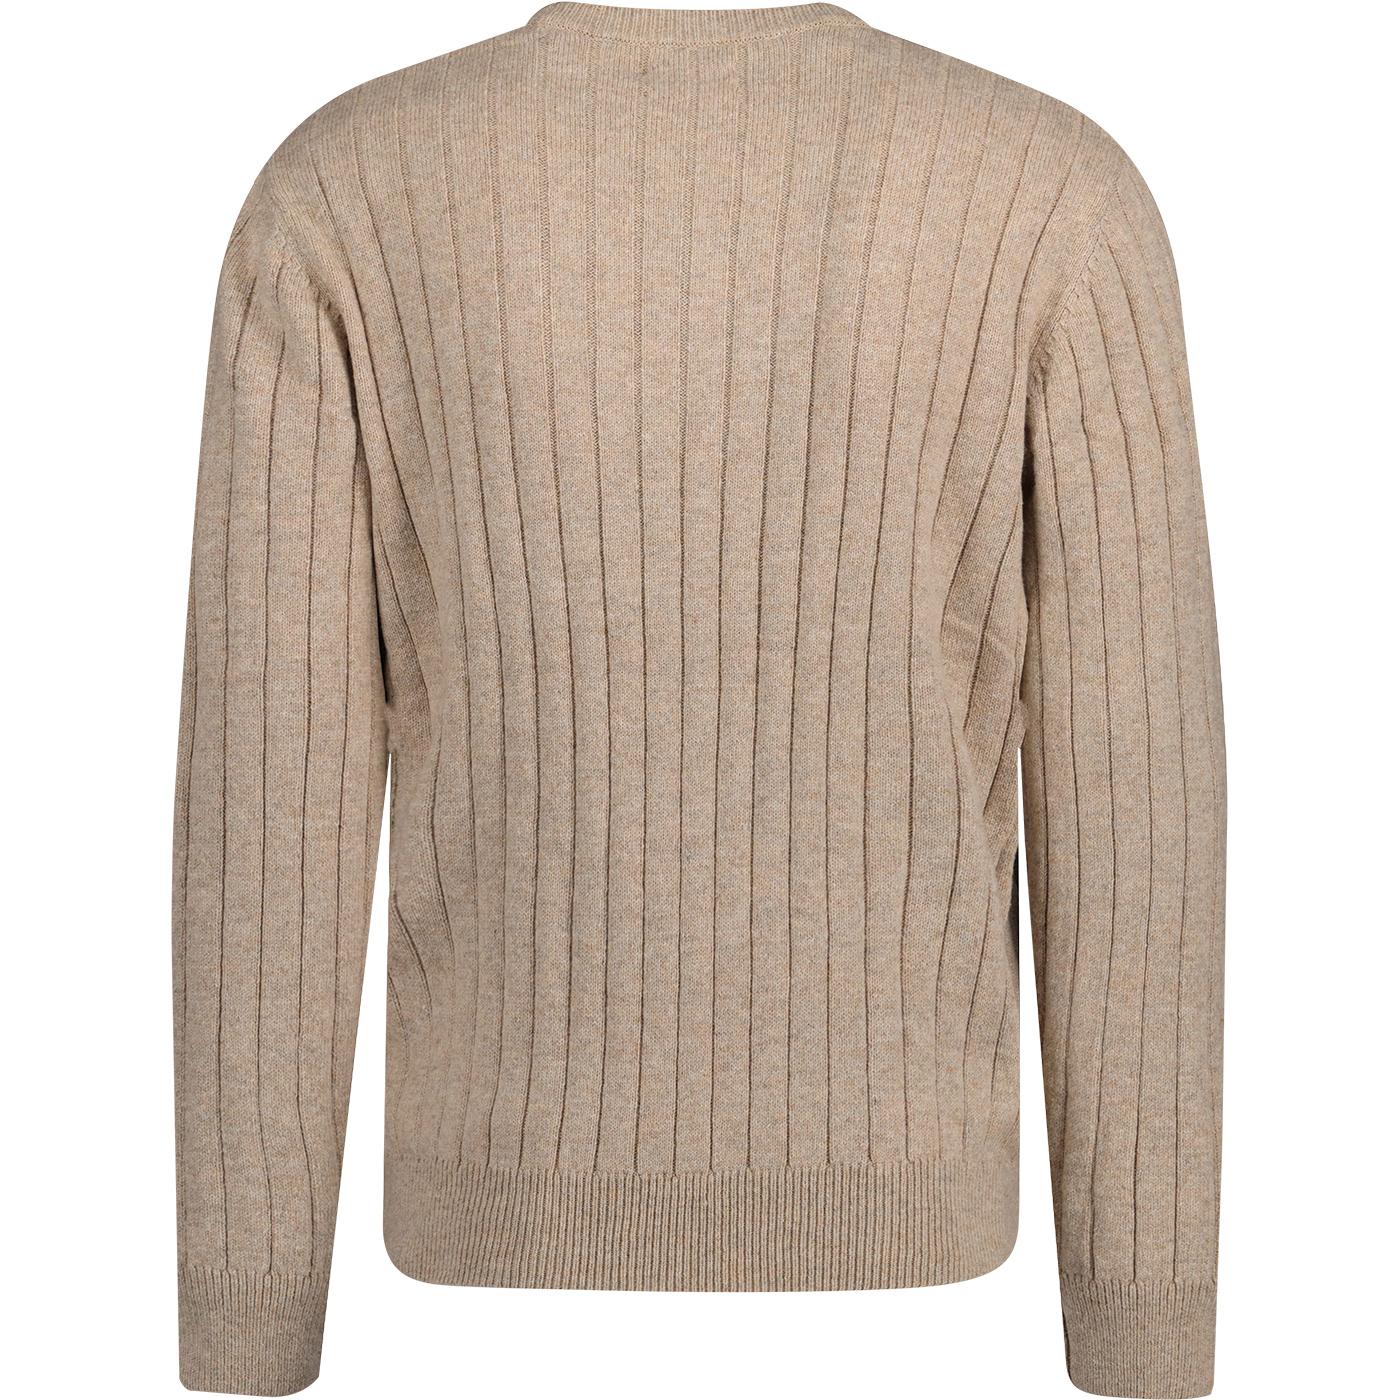 Chalmers Farah Vintage Crew Neck Sweater in Straw Beige